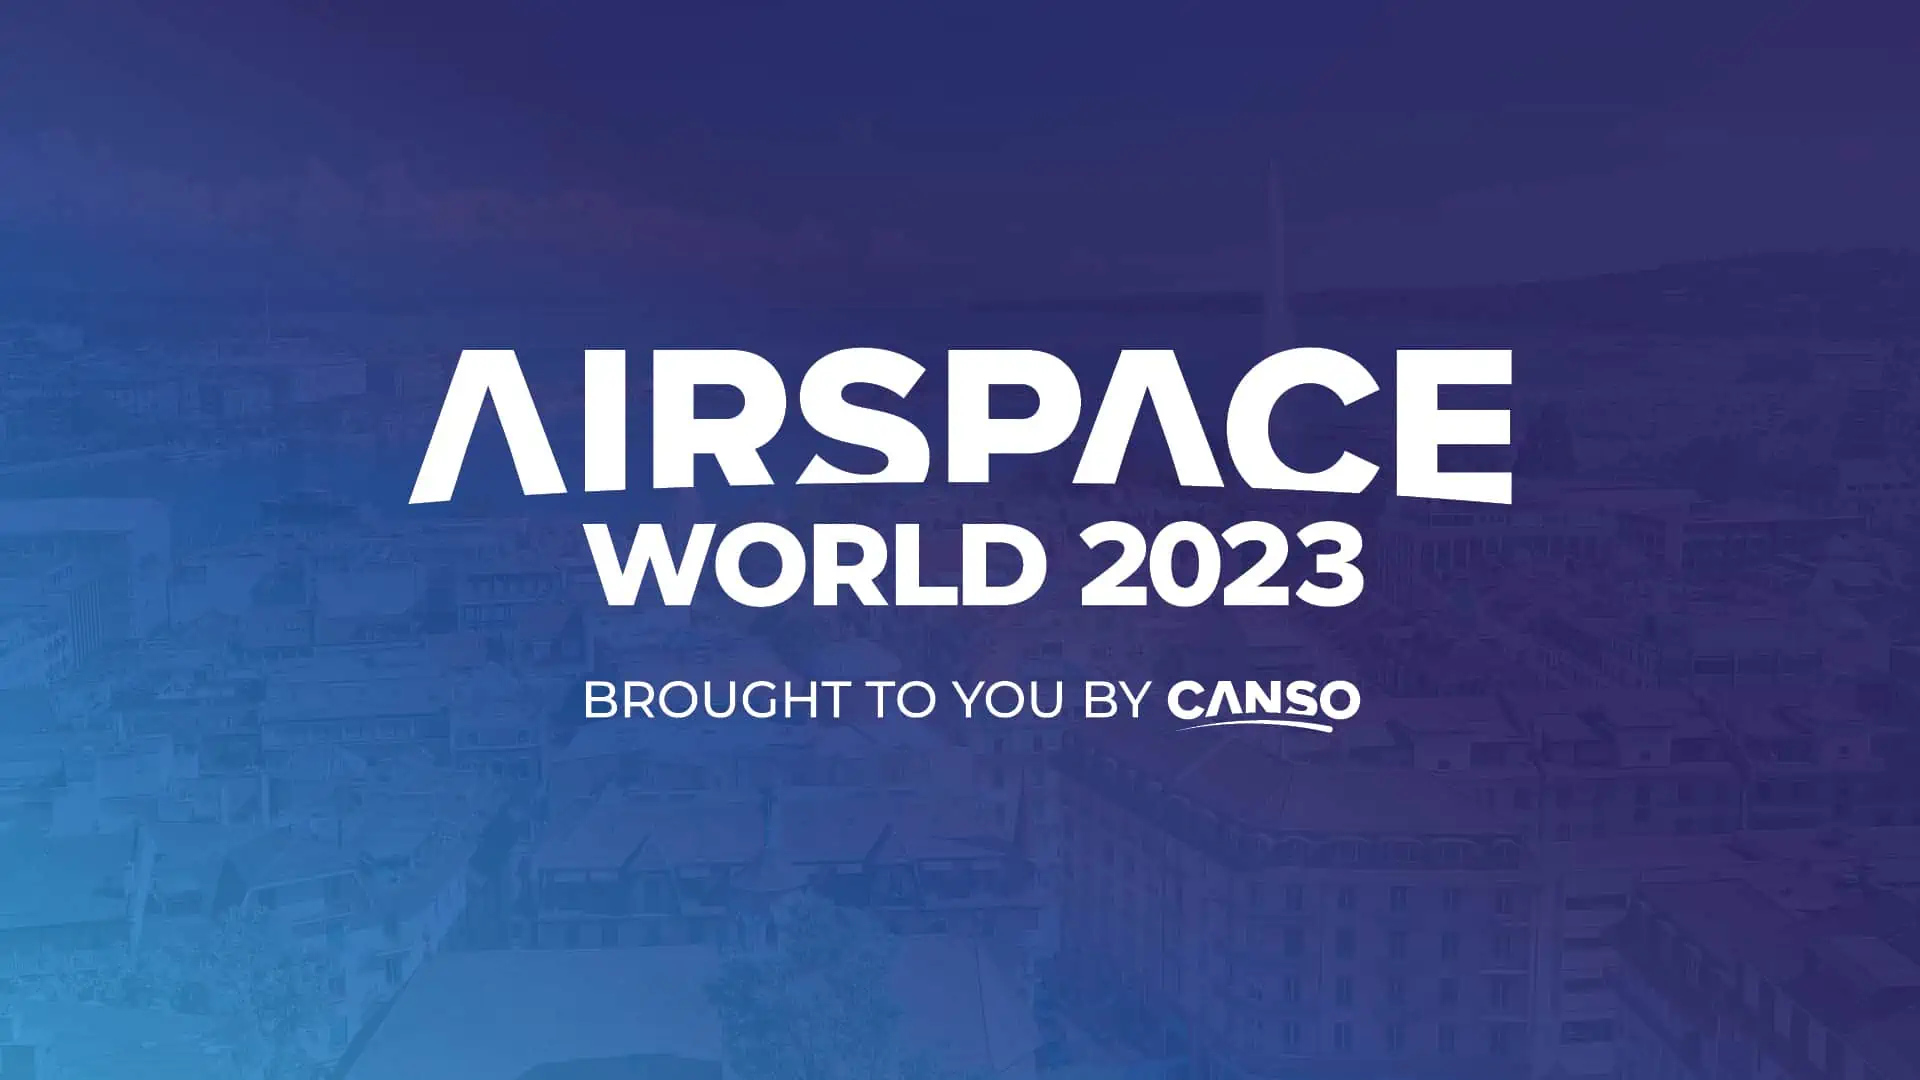 Airspace World 2023: presenti Enav e D-flight